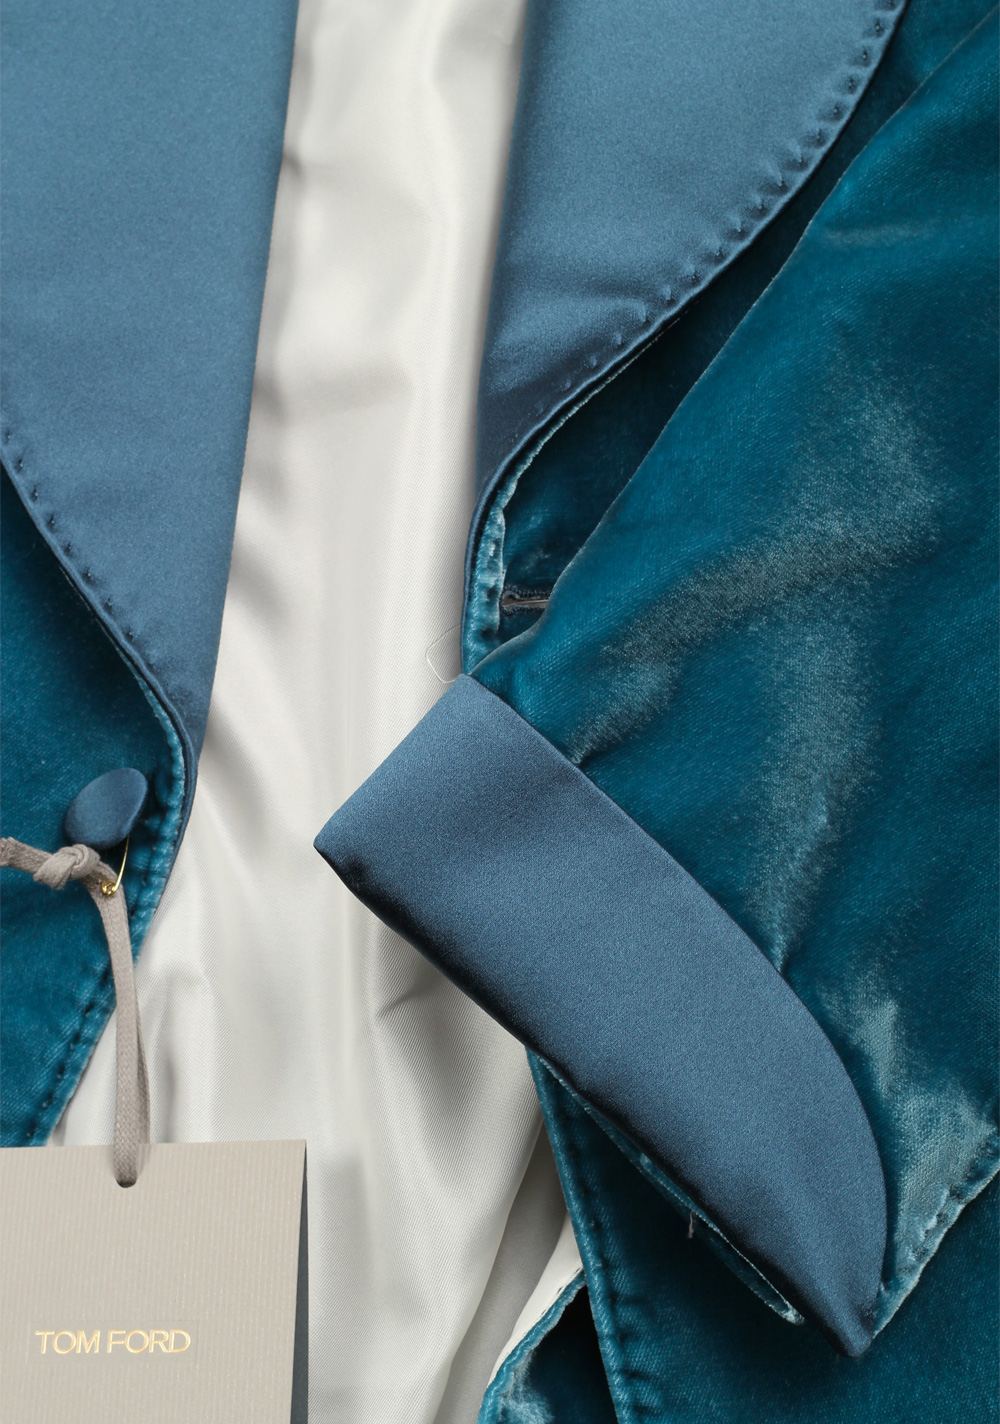 Shelton Shawl Collar Velvet Teal  Sport Coat Tuxedo Dinner Jacket Size Size 48C / 38S U.S. | Costume Limité